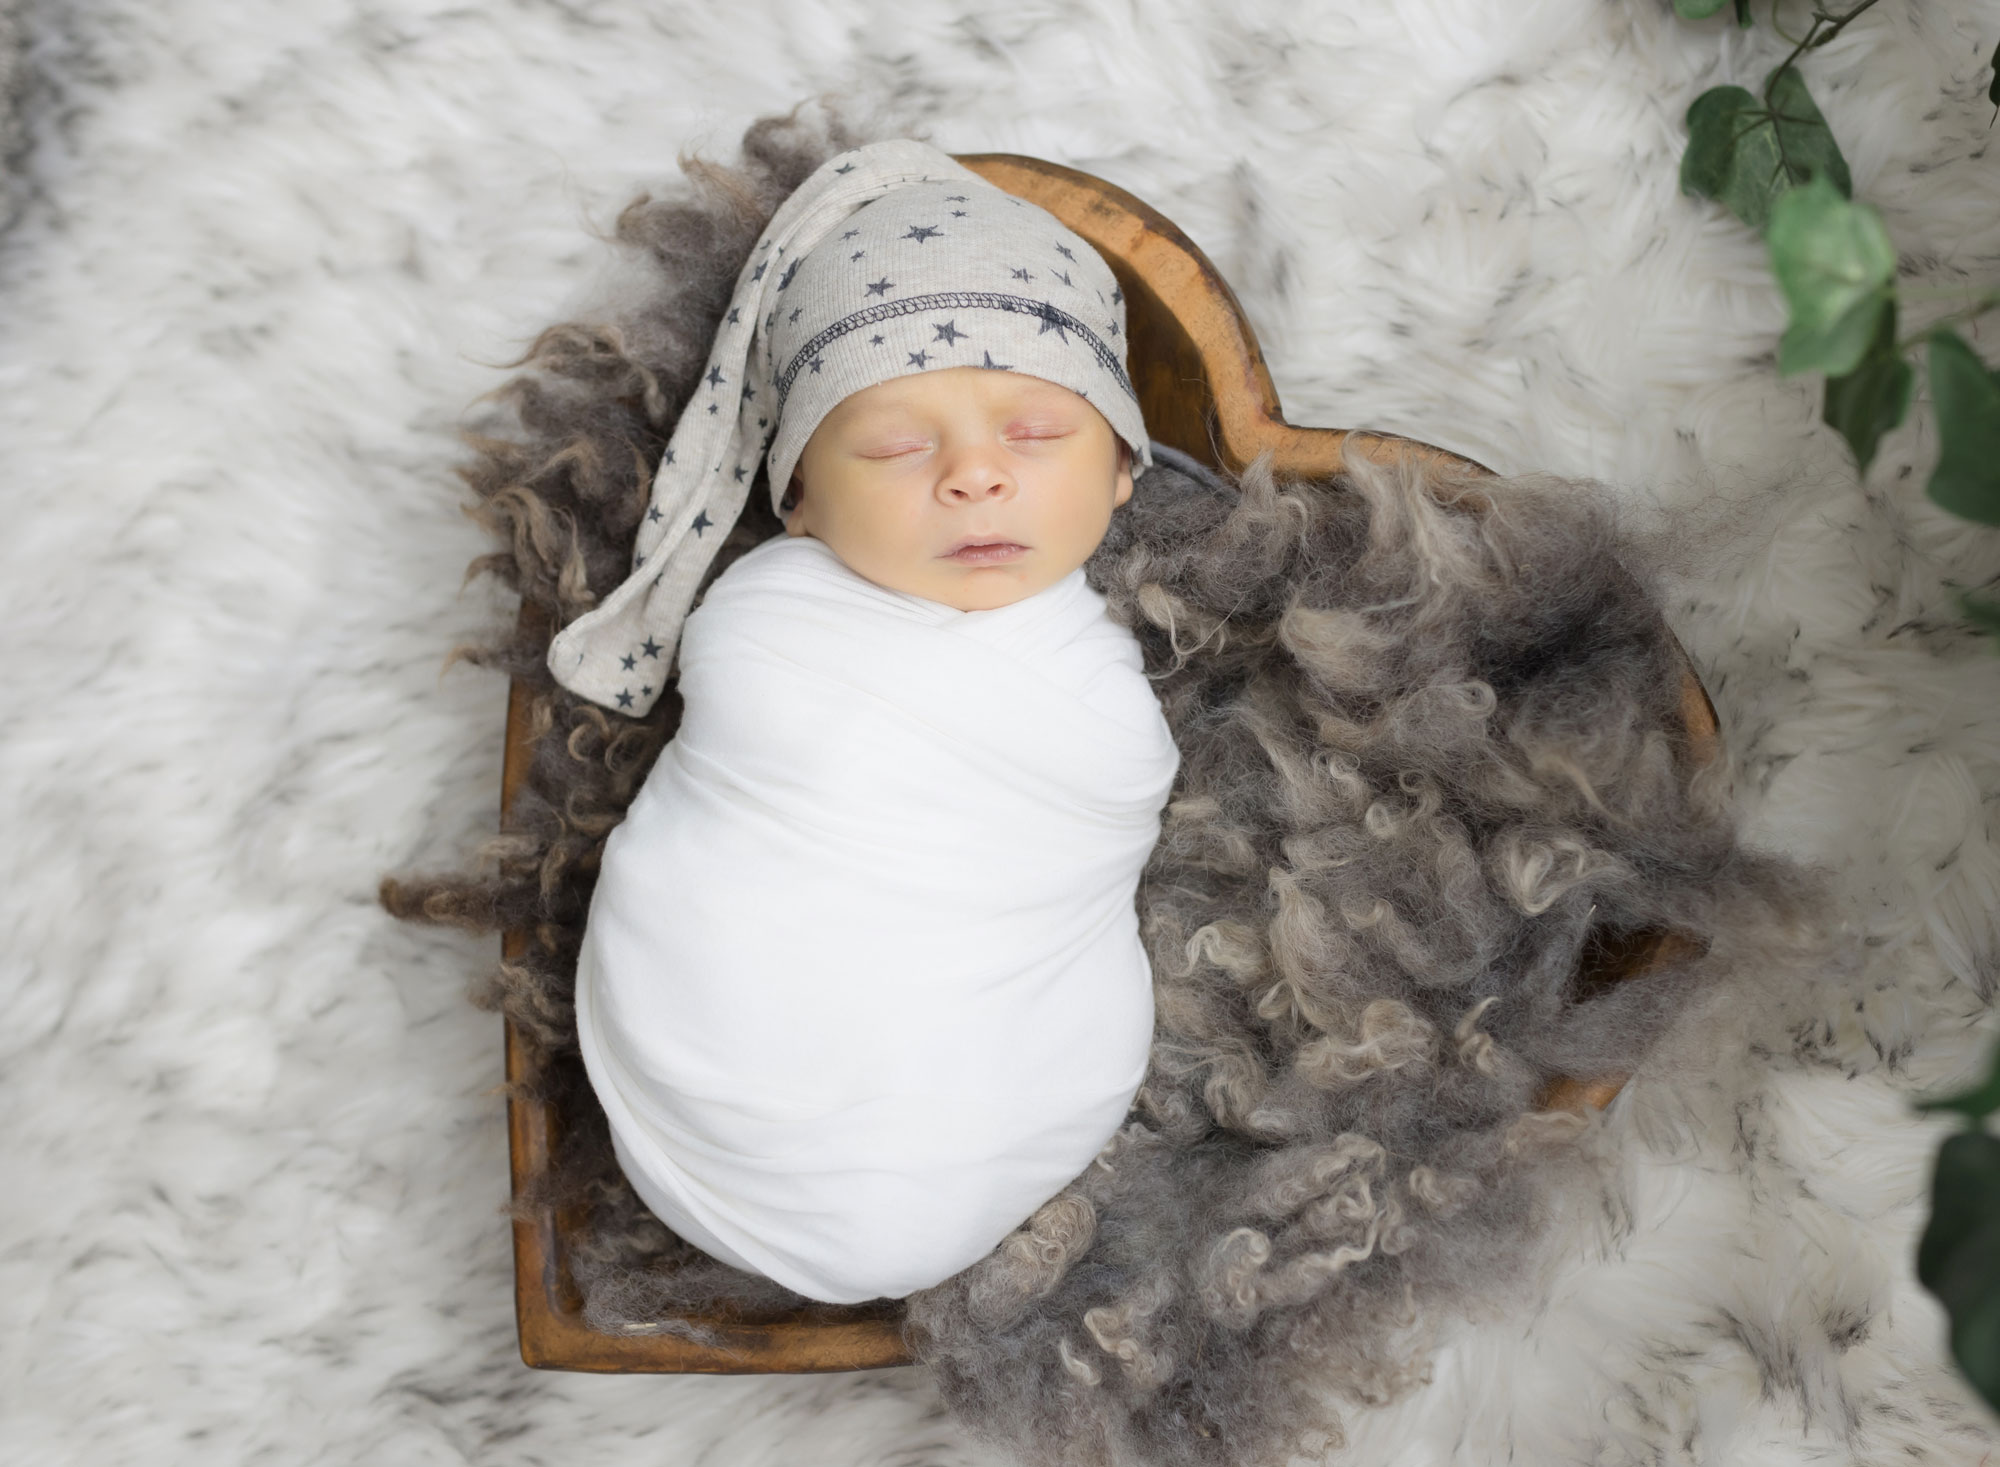 newborn baby with star hat